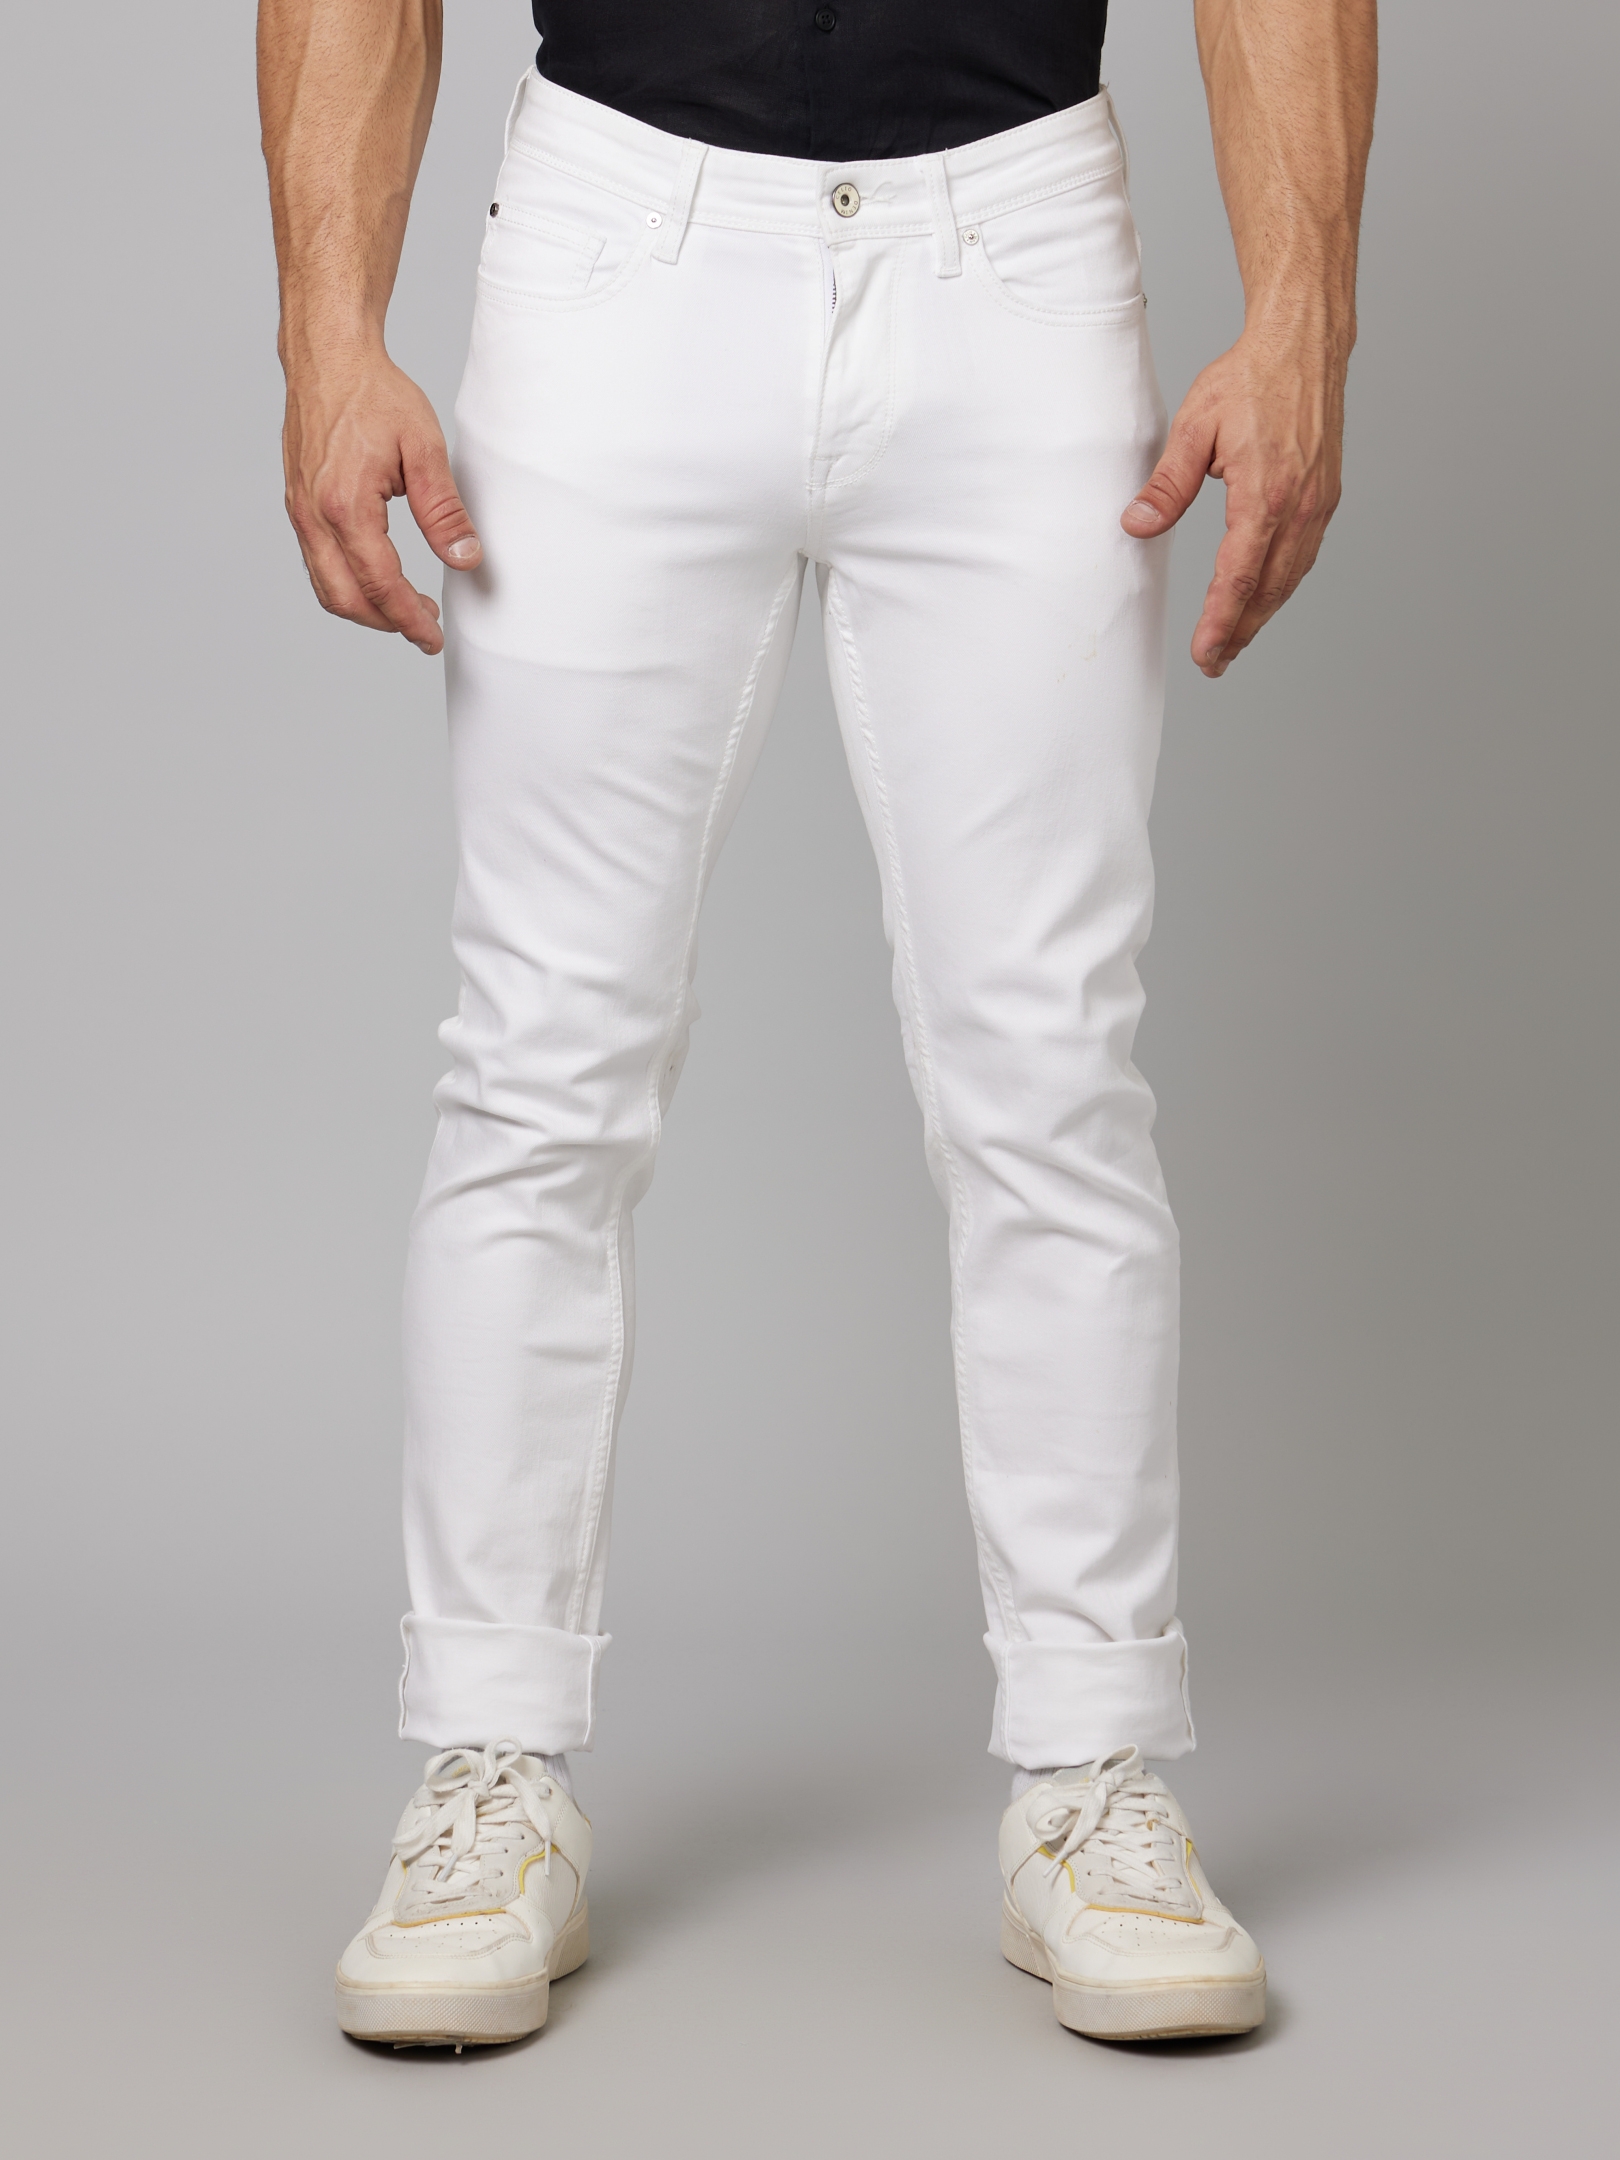 Men's White Cotton Blend Solid Regular Jeans